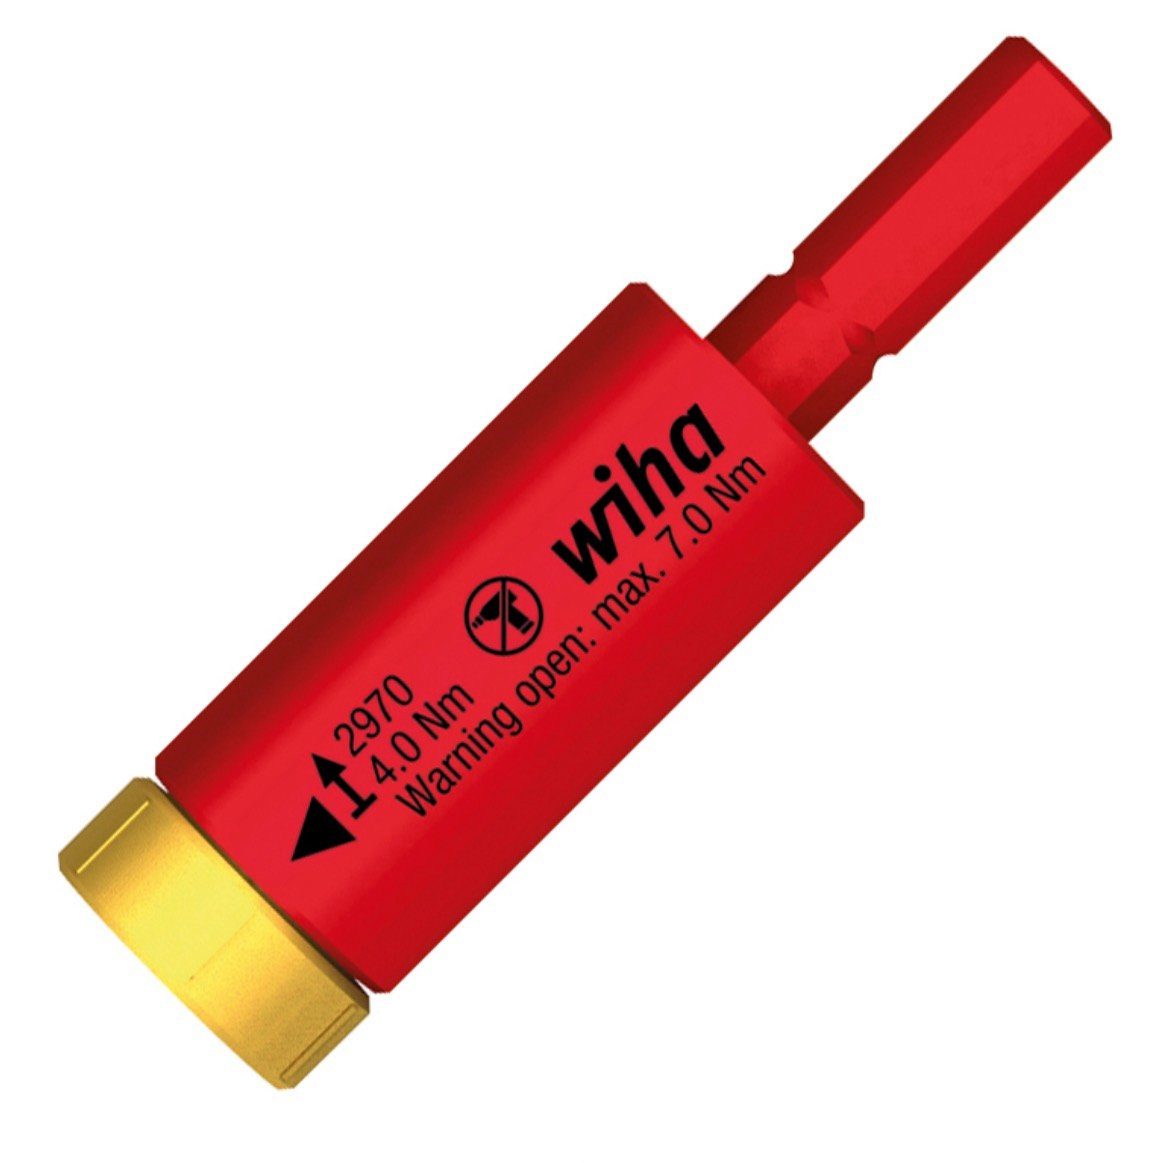 Adapter Wiha Schraubendreher Nm Wiha Easy (41345) Drehmoment Torque für slimBits 4,0